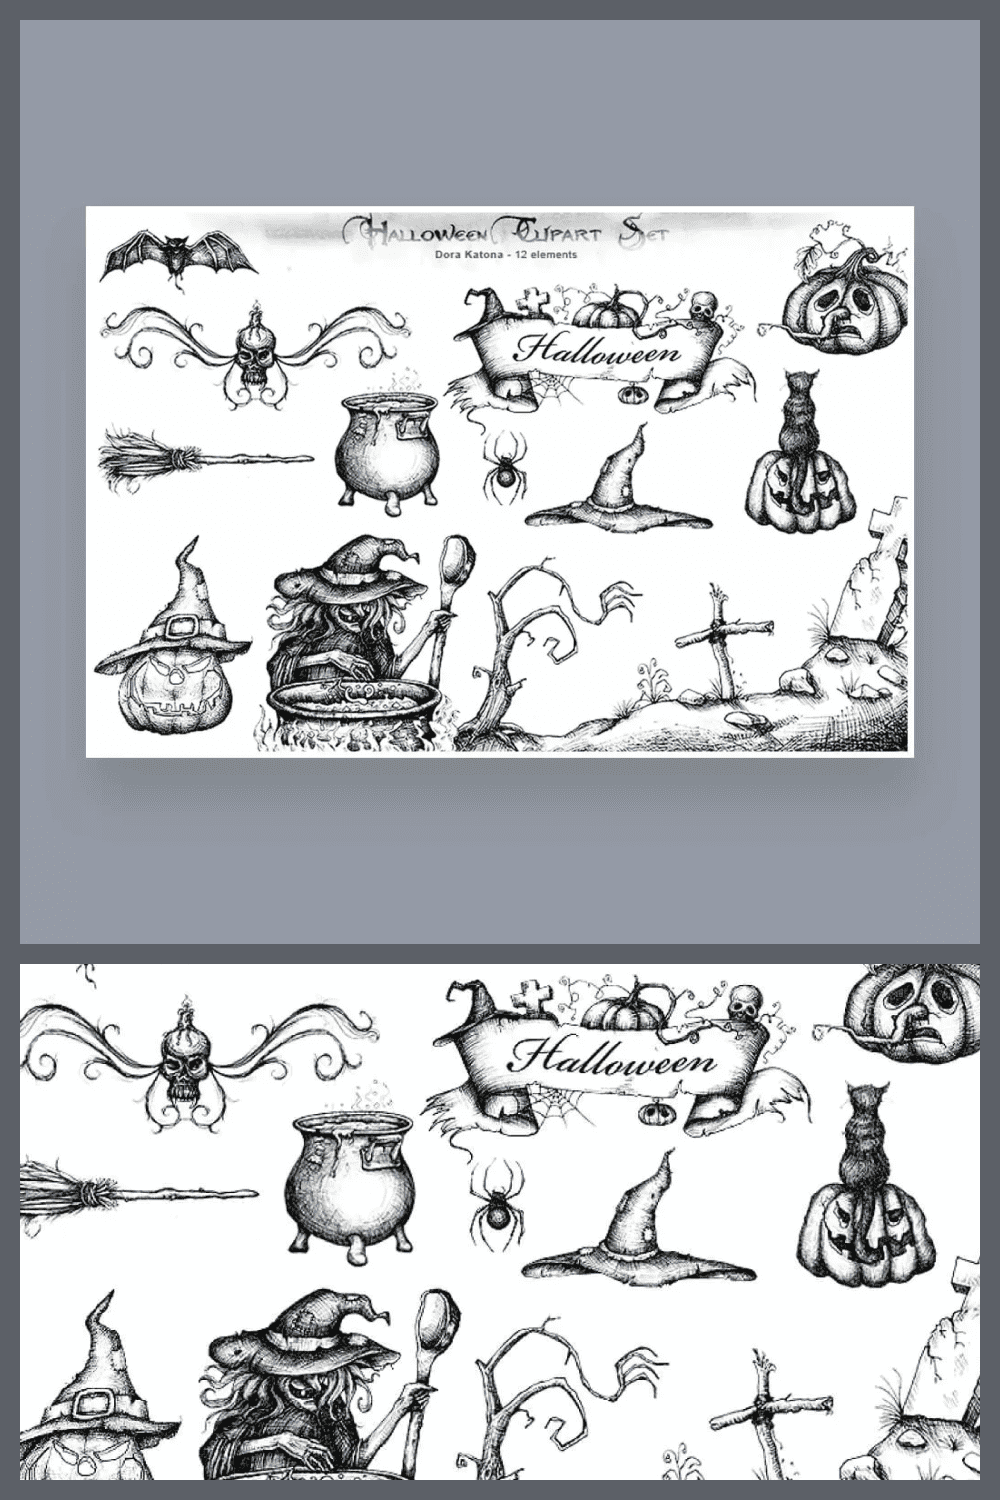 Sketches of a cauldron, witch, pumpkin, broom, hat, spider.